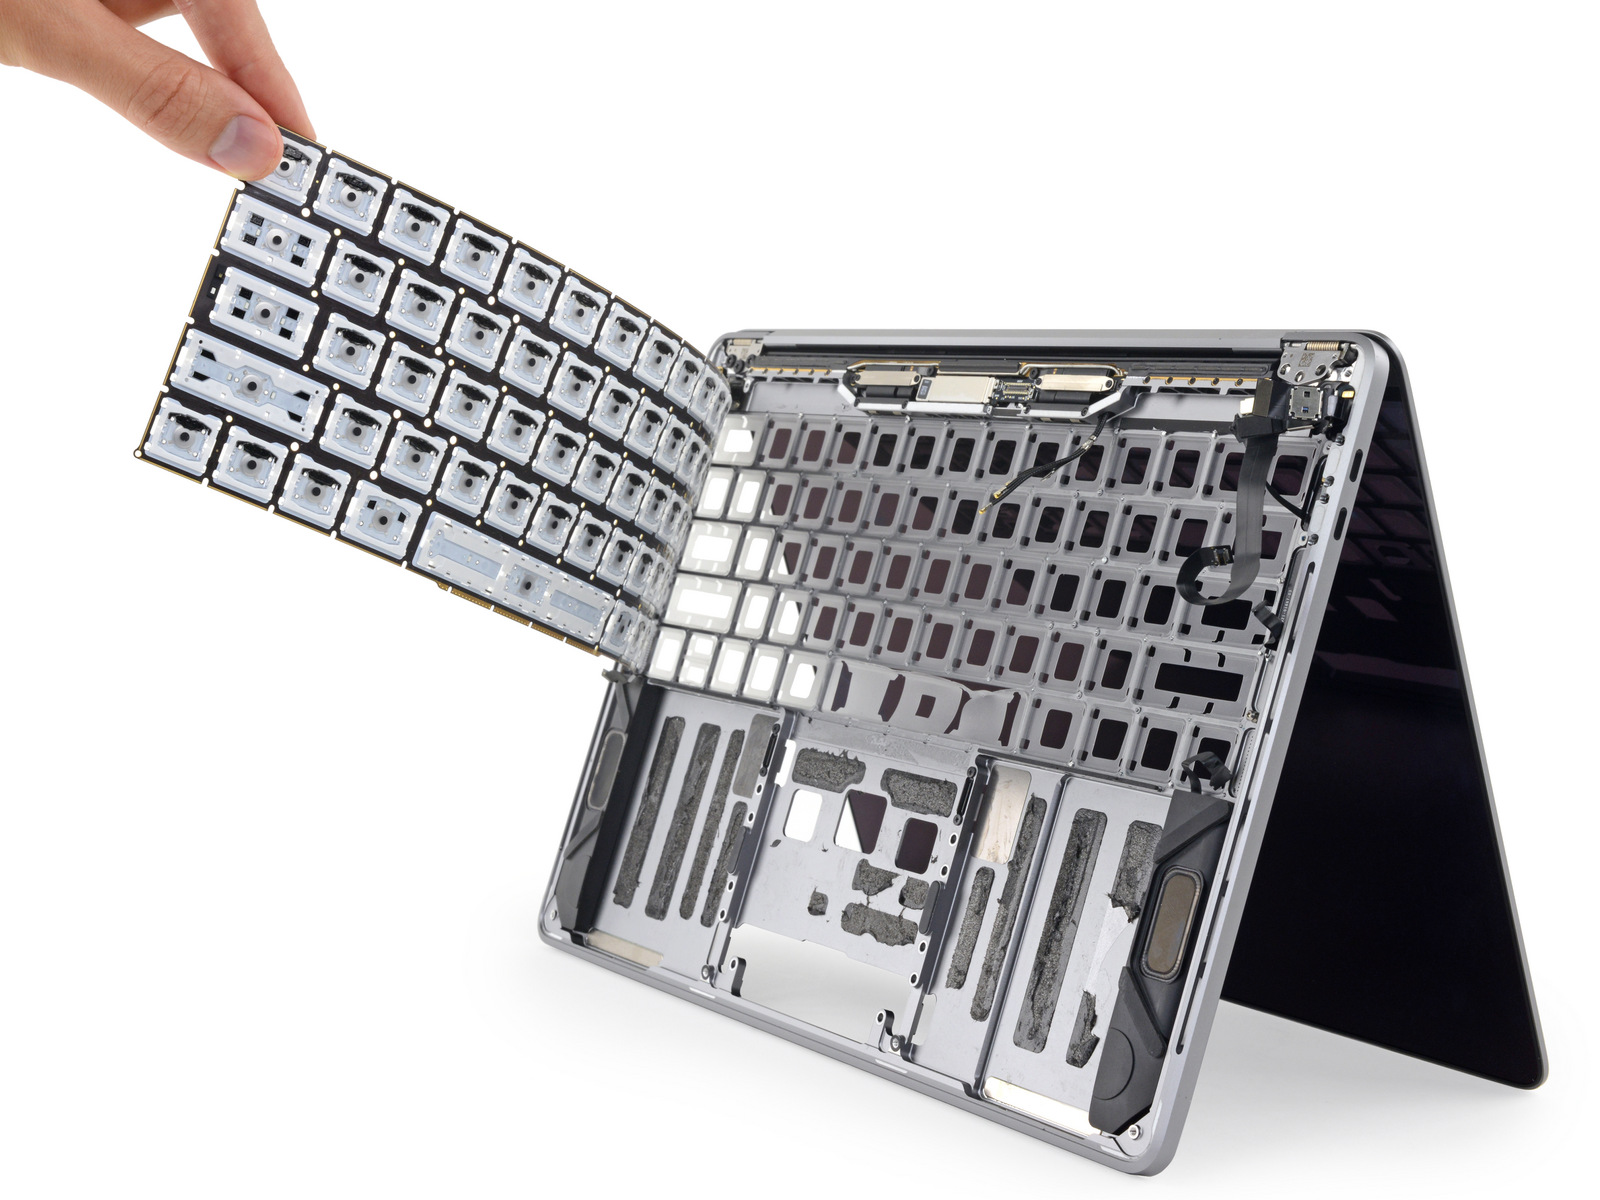 iFixit testa o teclado e a membrana de silicone do novo MacBook Pro